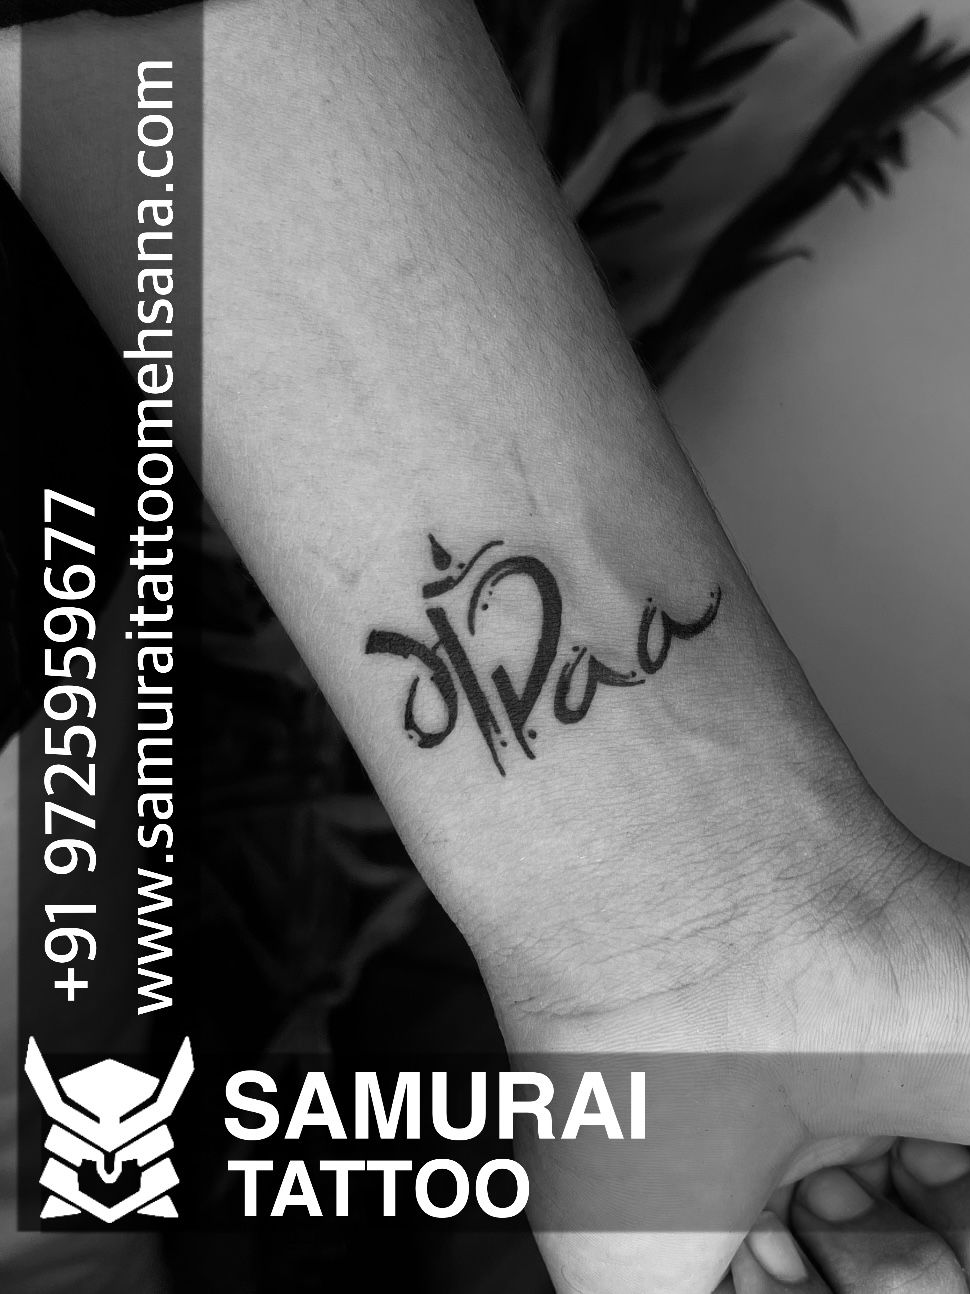 Angel Tattoo Design Studio - Maa tattoo design | Facebook